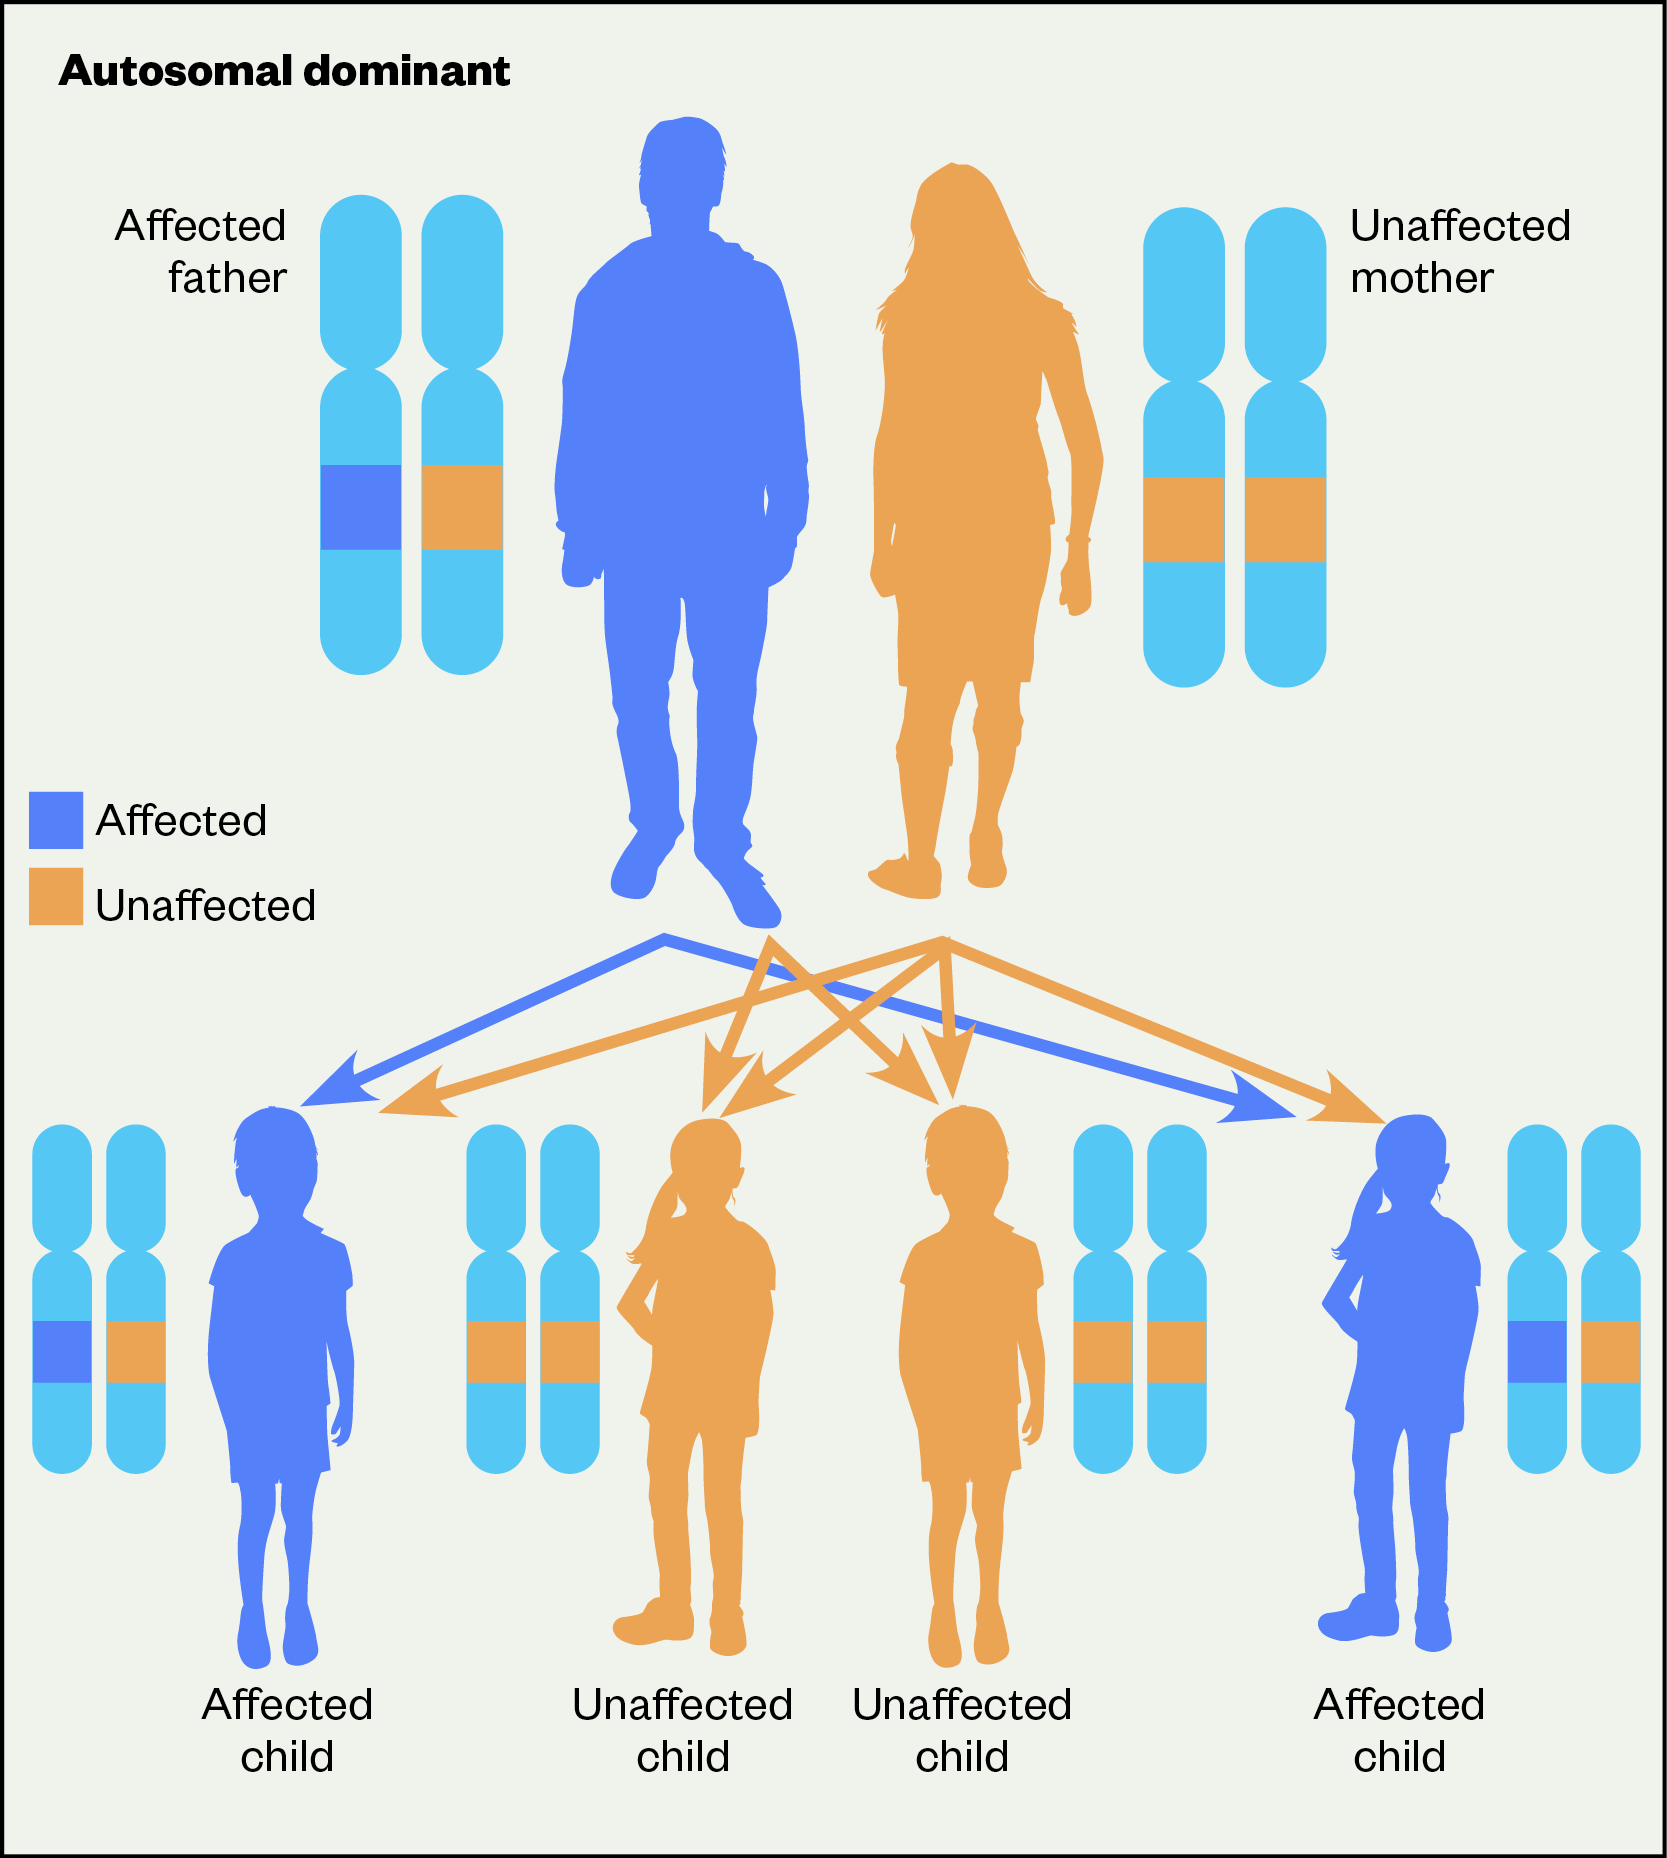 Figure 1: Inheritance of autosomal dominant genes